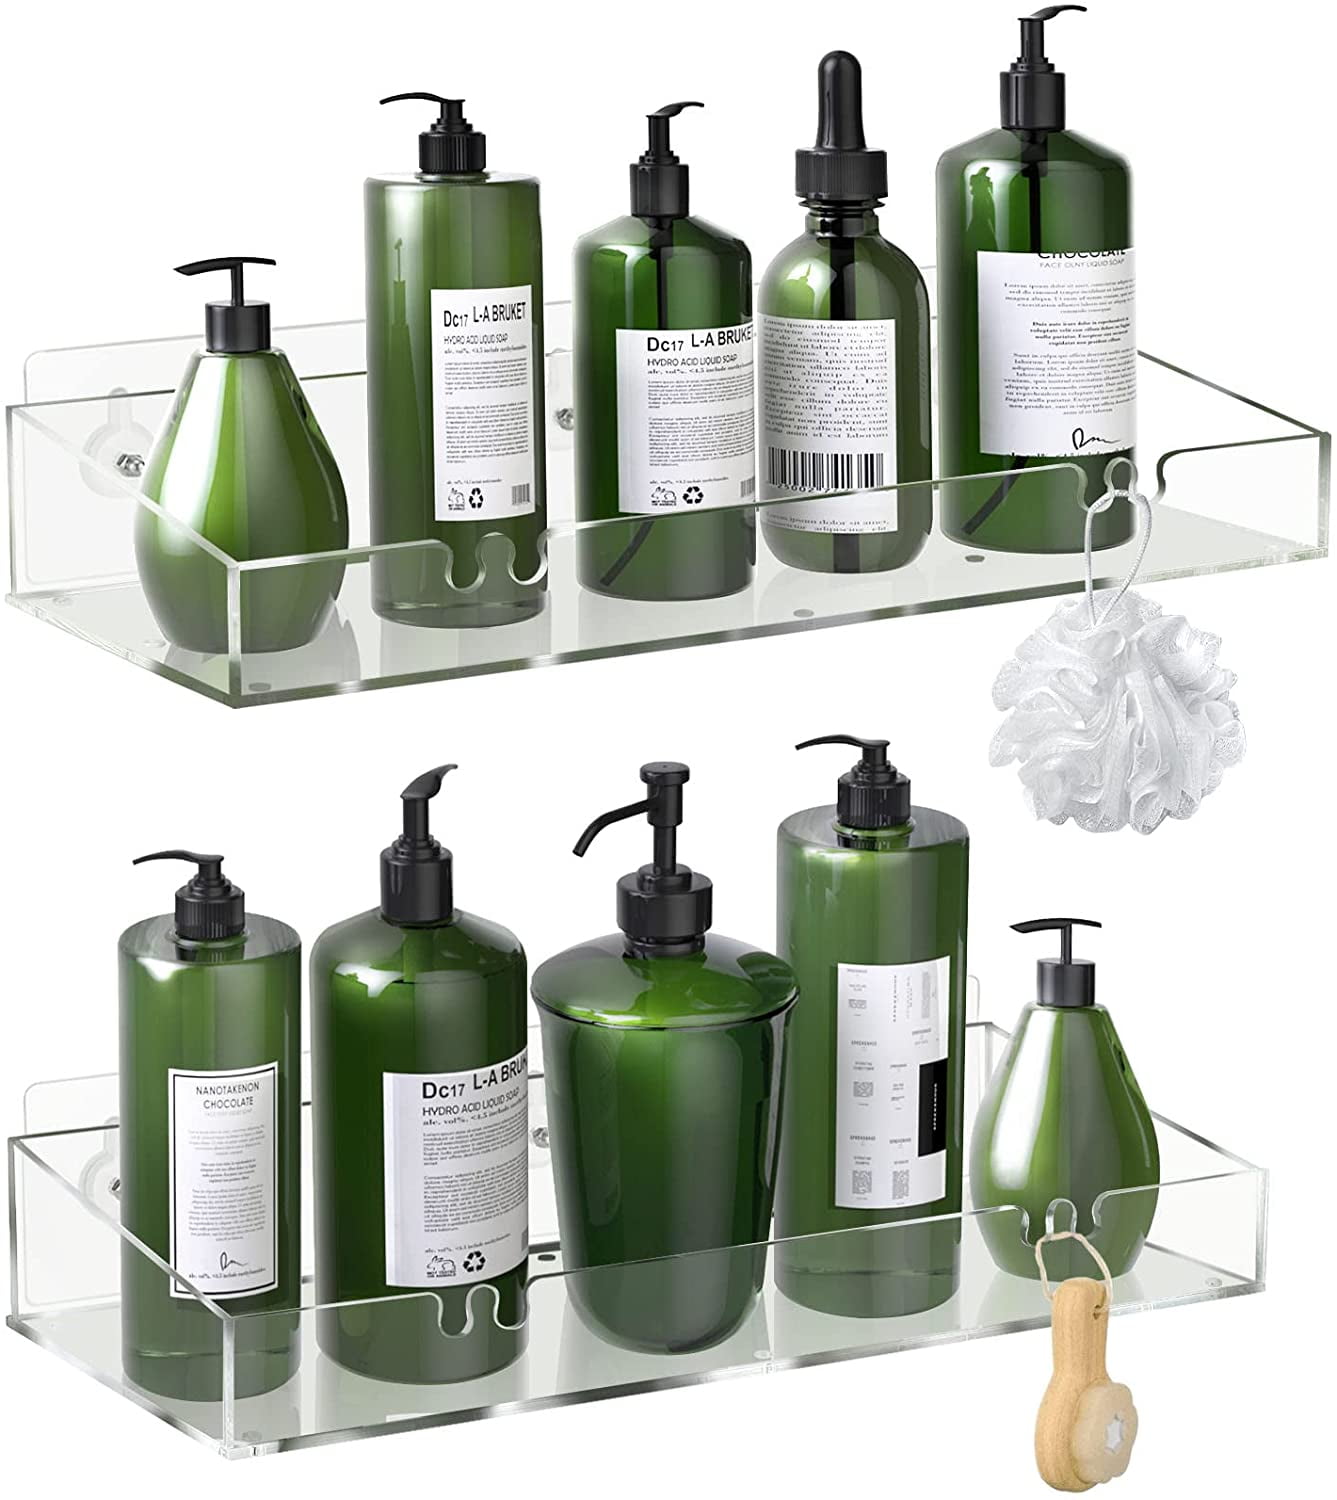 Acrylic Shower Caddy Shelves, 2 Pack Self Adhesive Bathroom Storage  Organizer, H